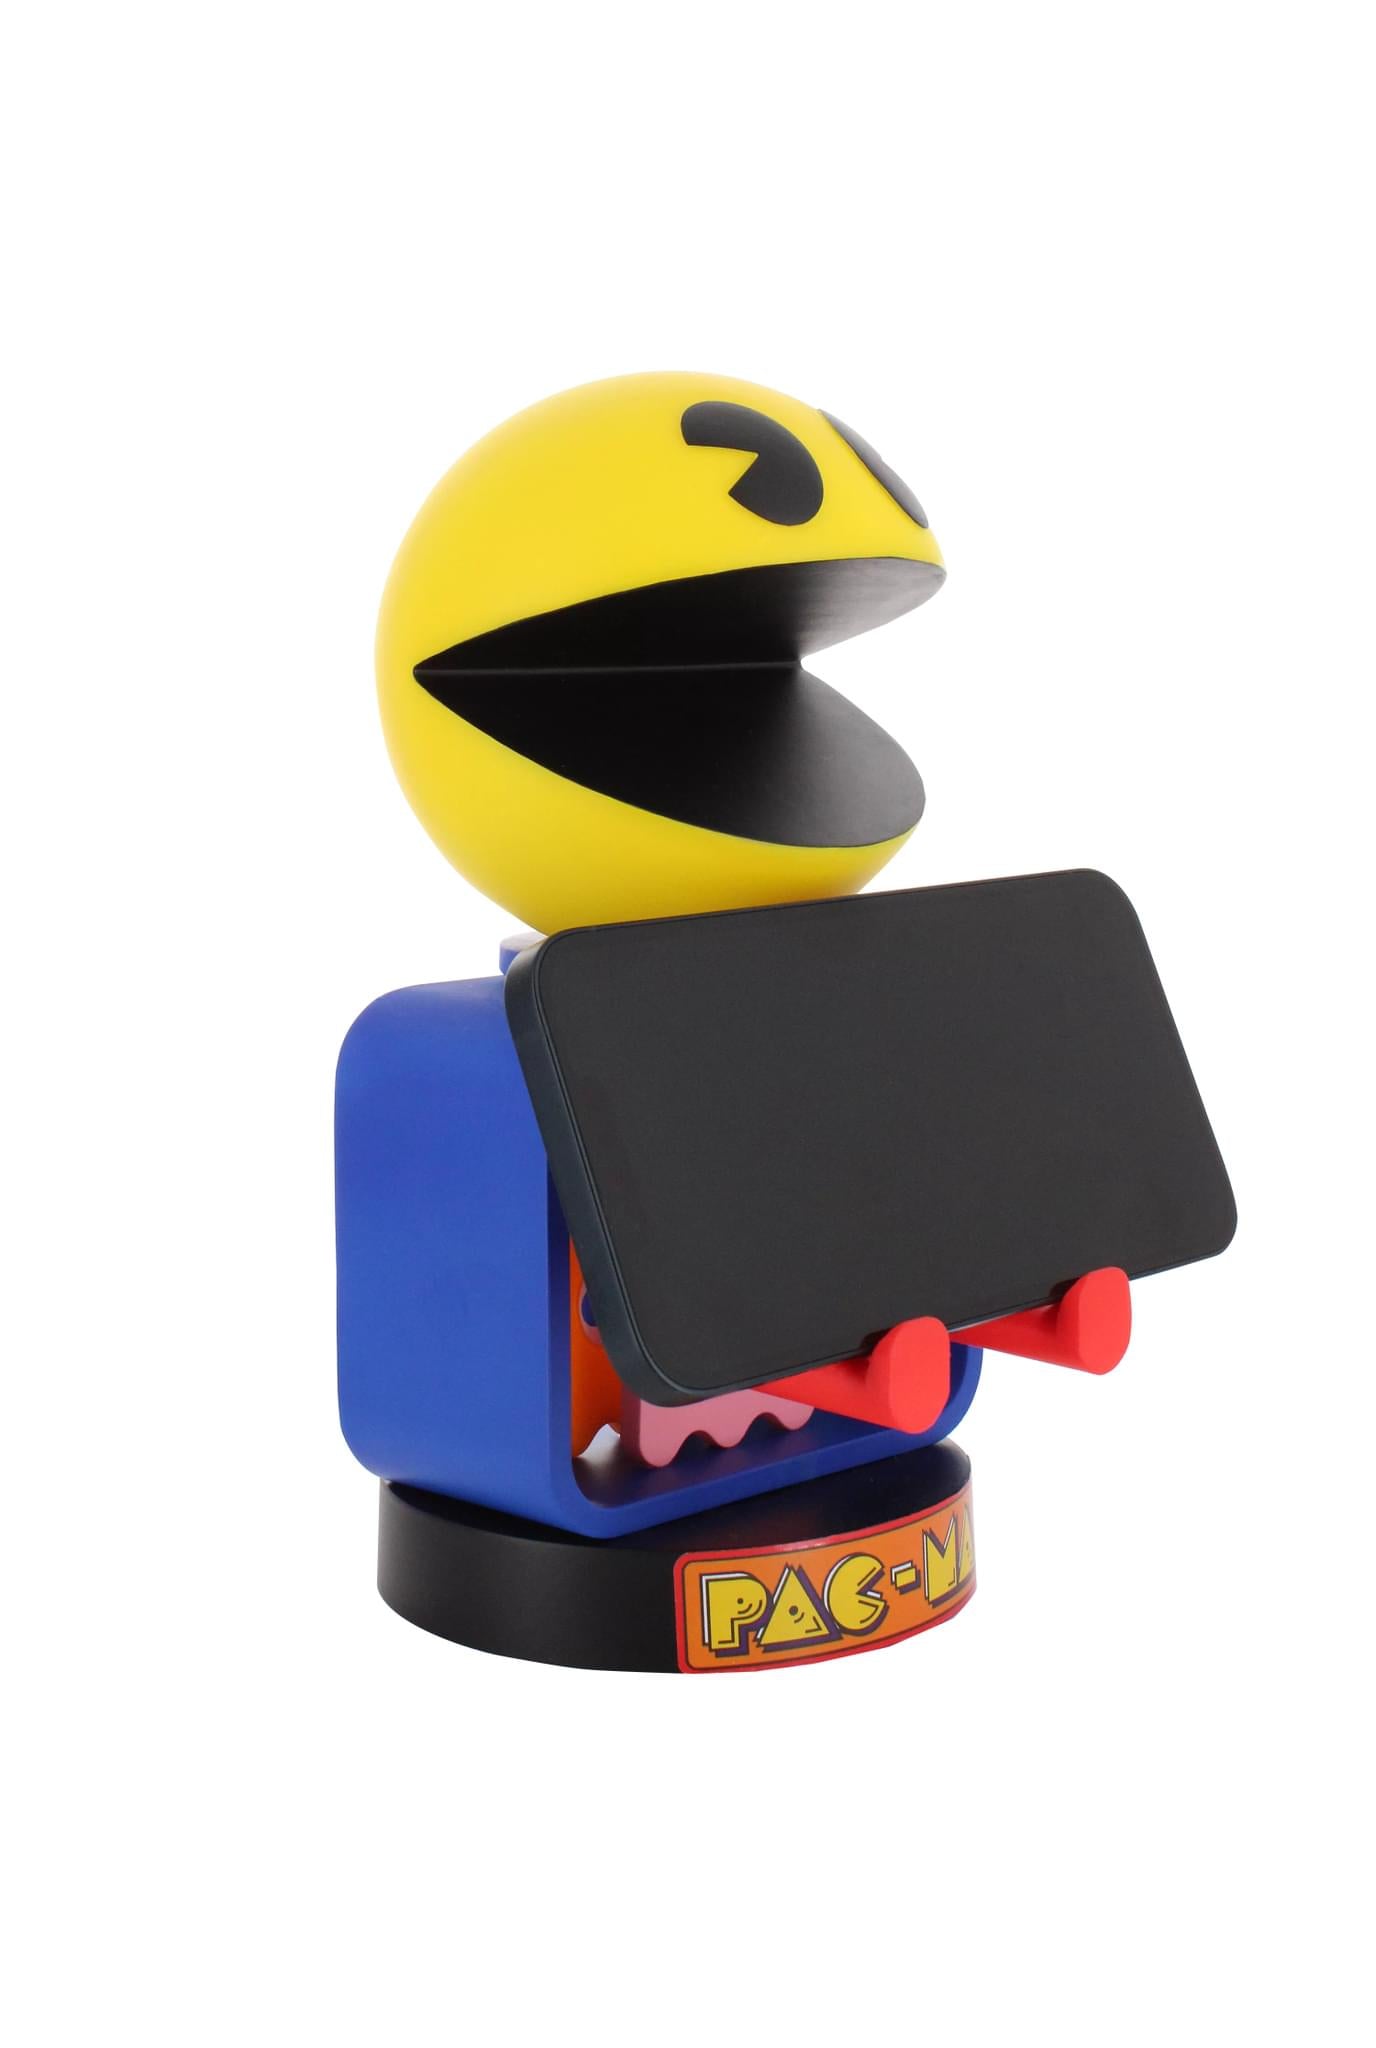 Bandai: Pac Man Cable Guys Original Controller and Phone Holder - EXG Pro